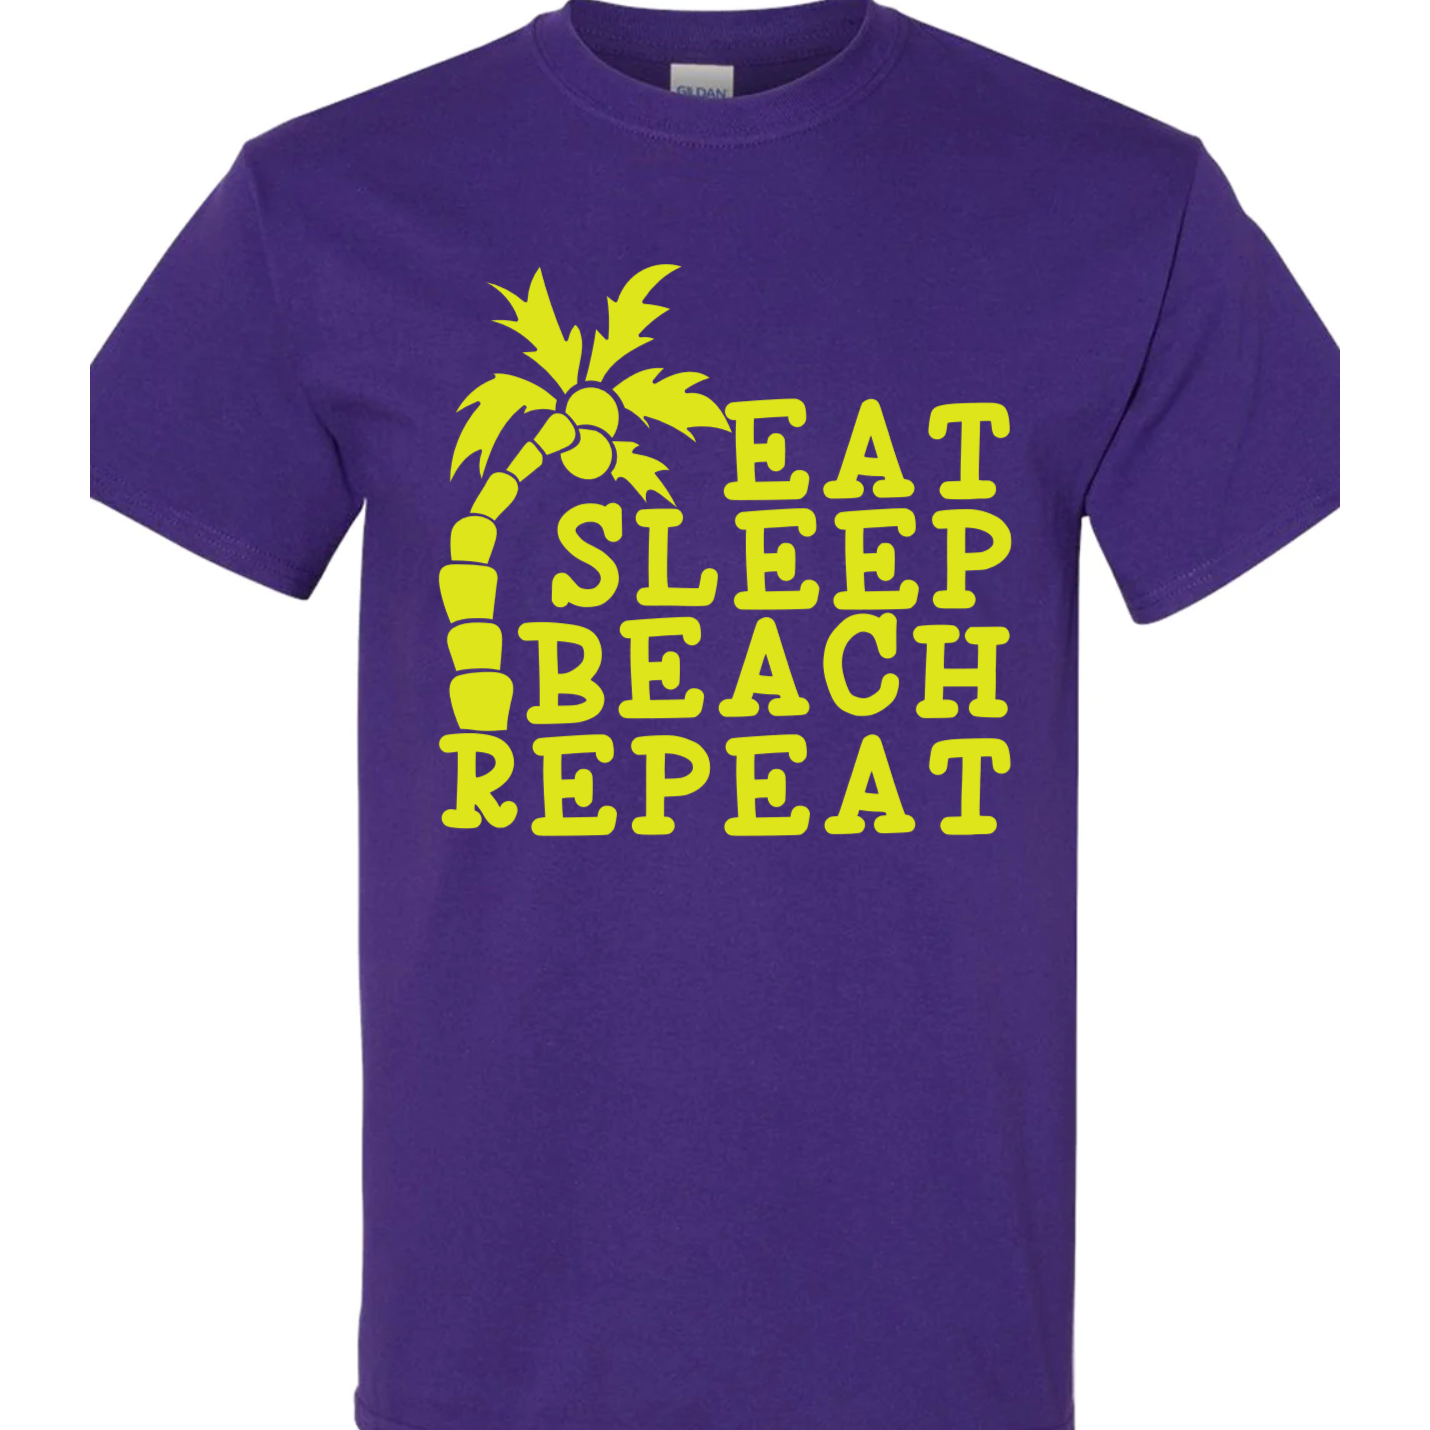 Eat Sleep Beach Repeat Vinyl Graphic for Shirts